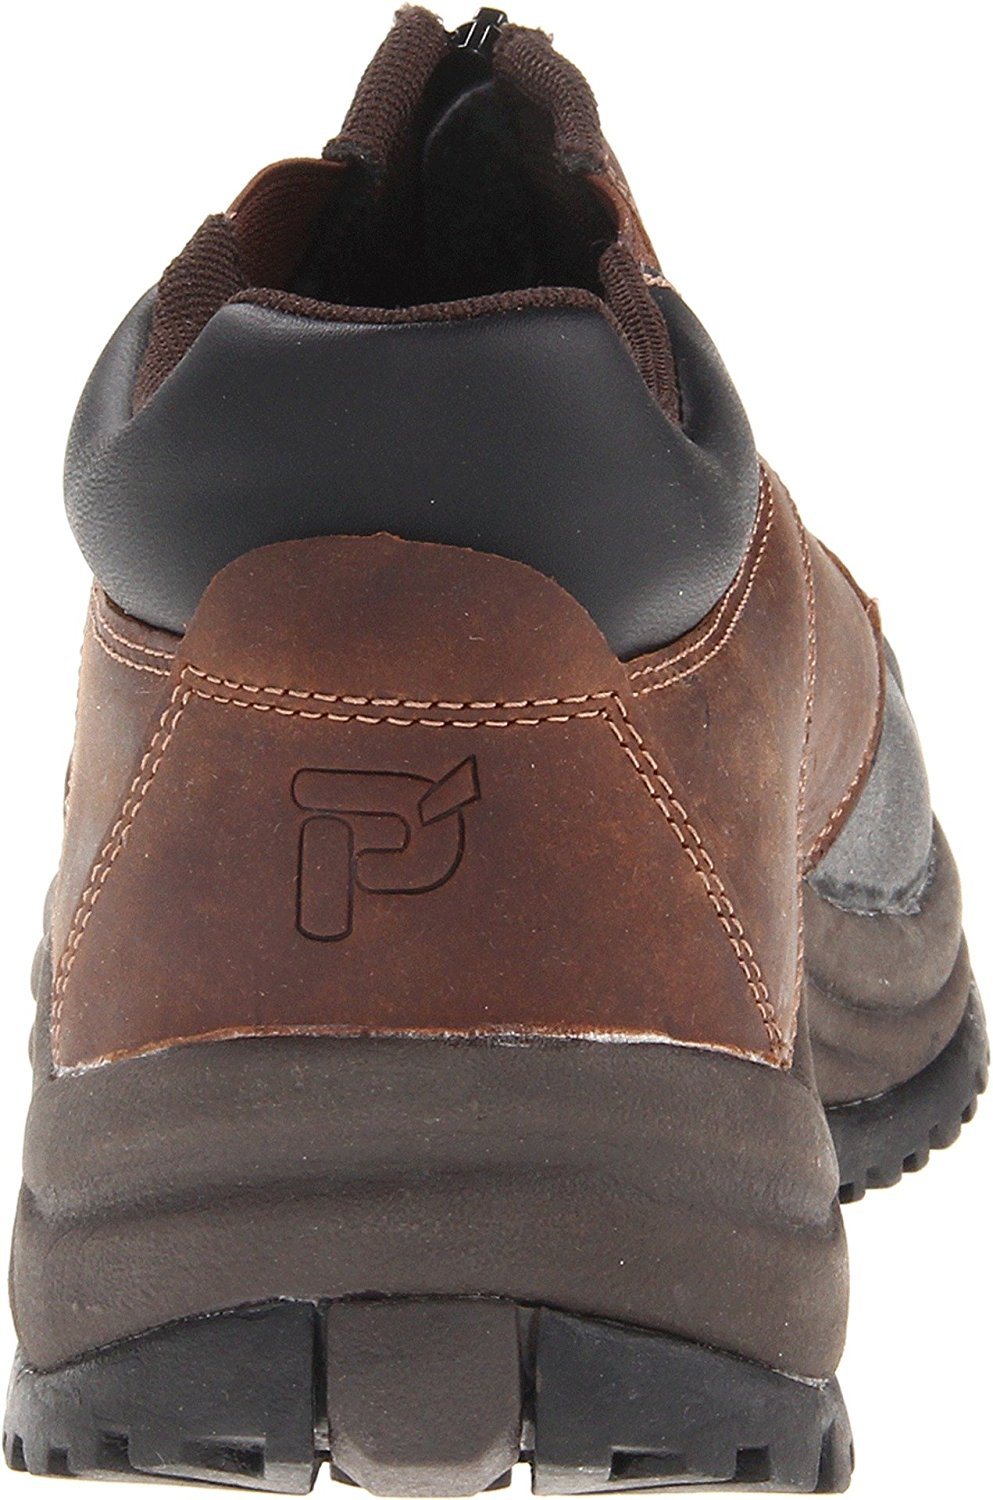 Propet Men's Blizzard Ankle Zip Boot, Brown/Black, Size 10.5 g6rU | eBay